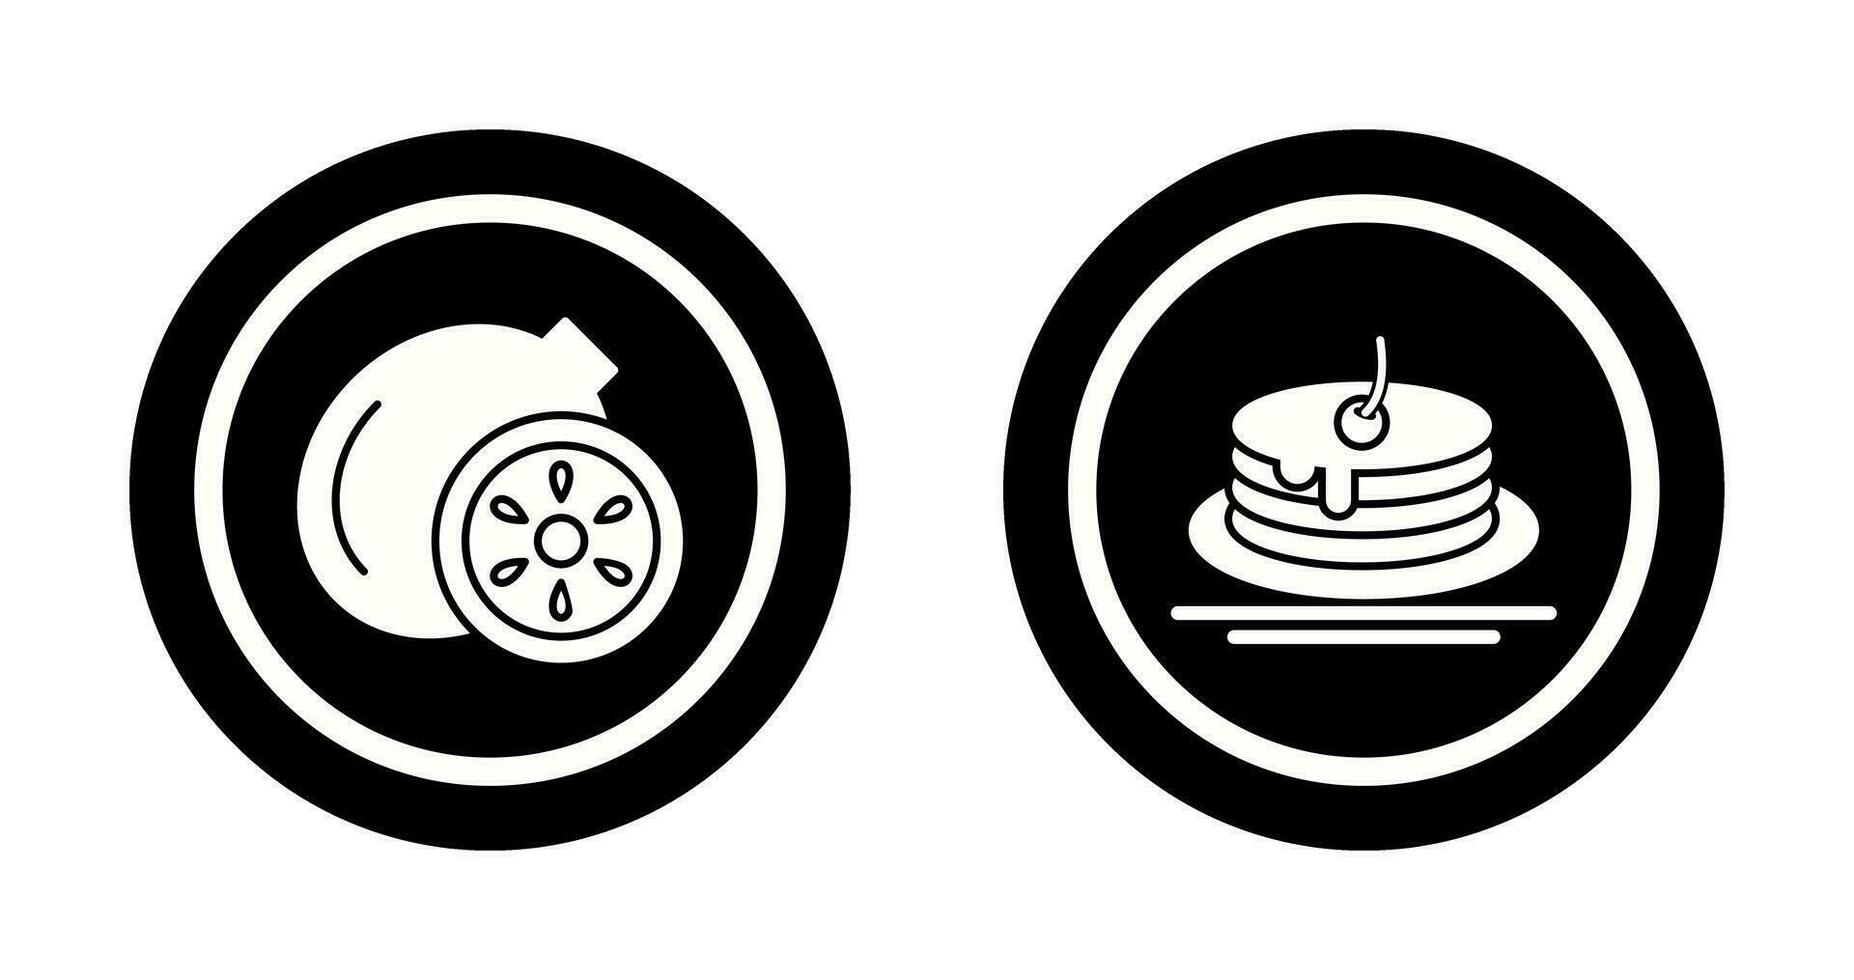 Kiwi and Pancake Icon vector